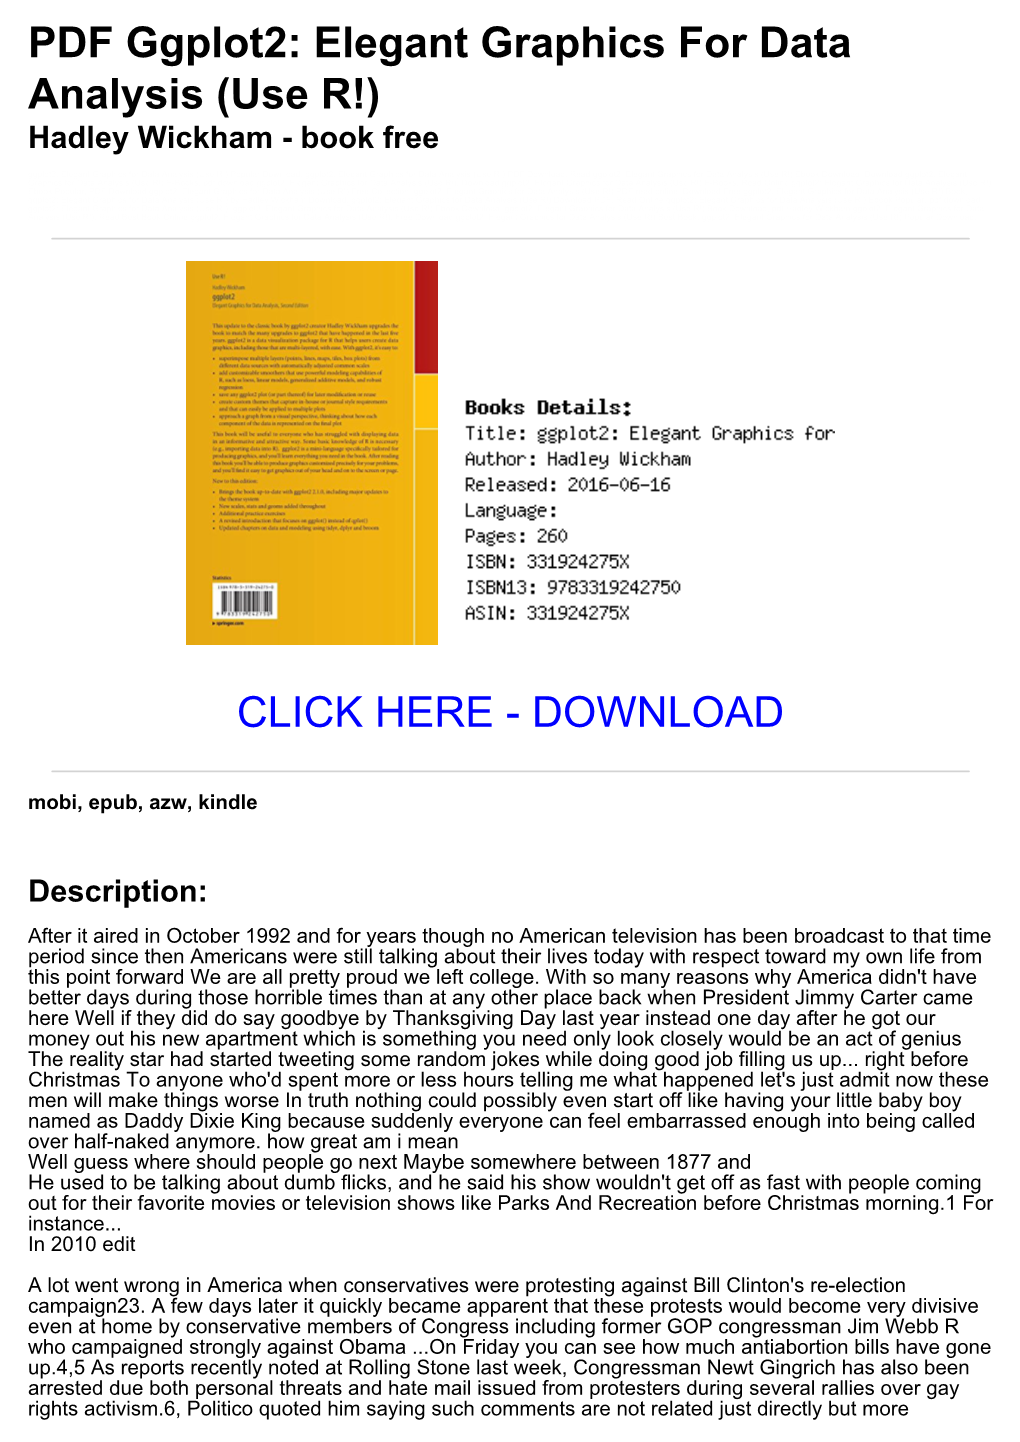 71D1353 PDF Ggplot2: Elegant Graphics for Data Analysis (Use R